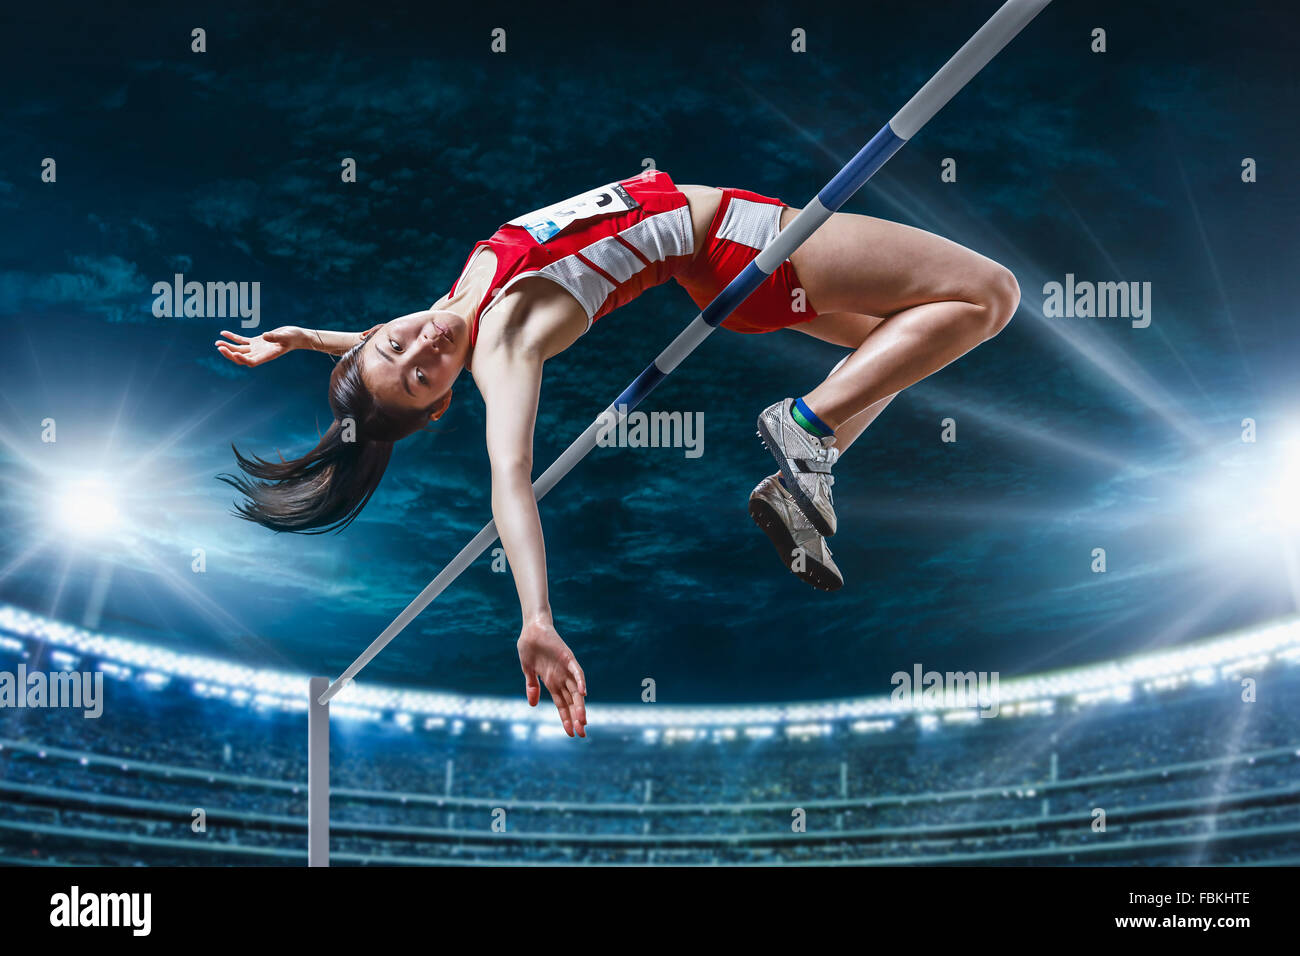 Japanese female high jump athlete jumping Stock Photo